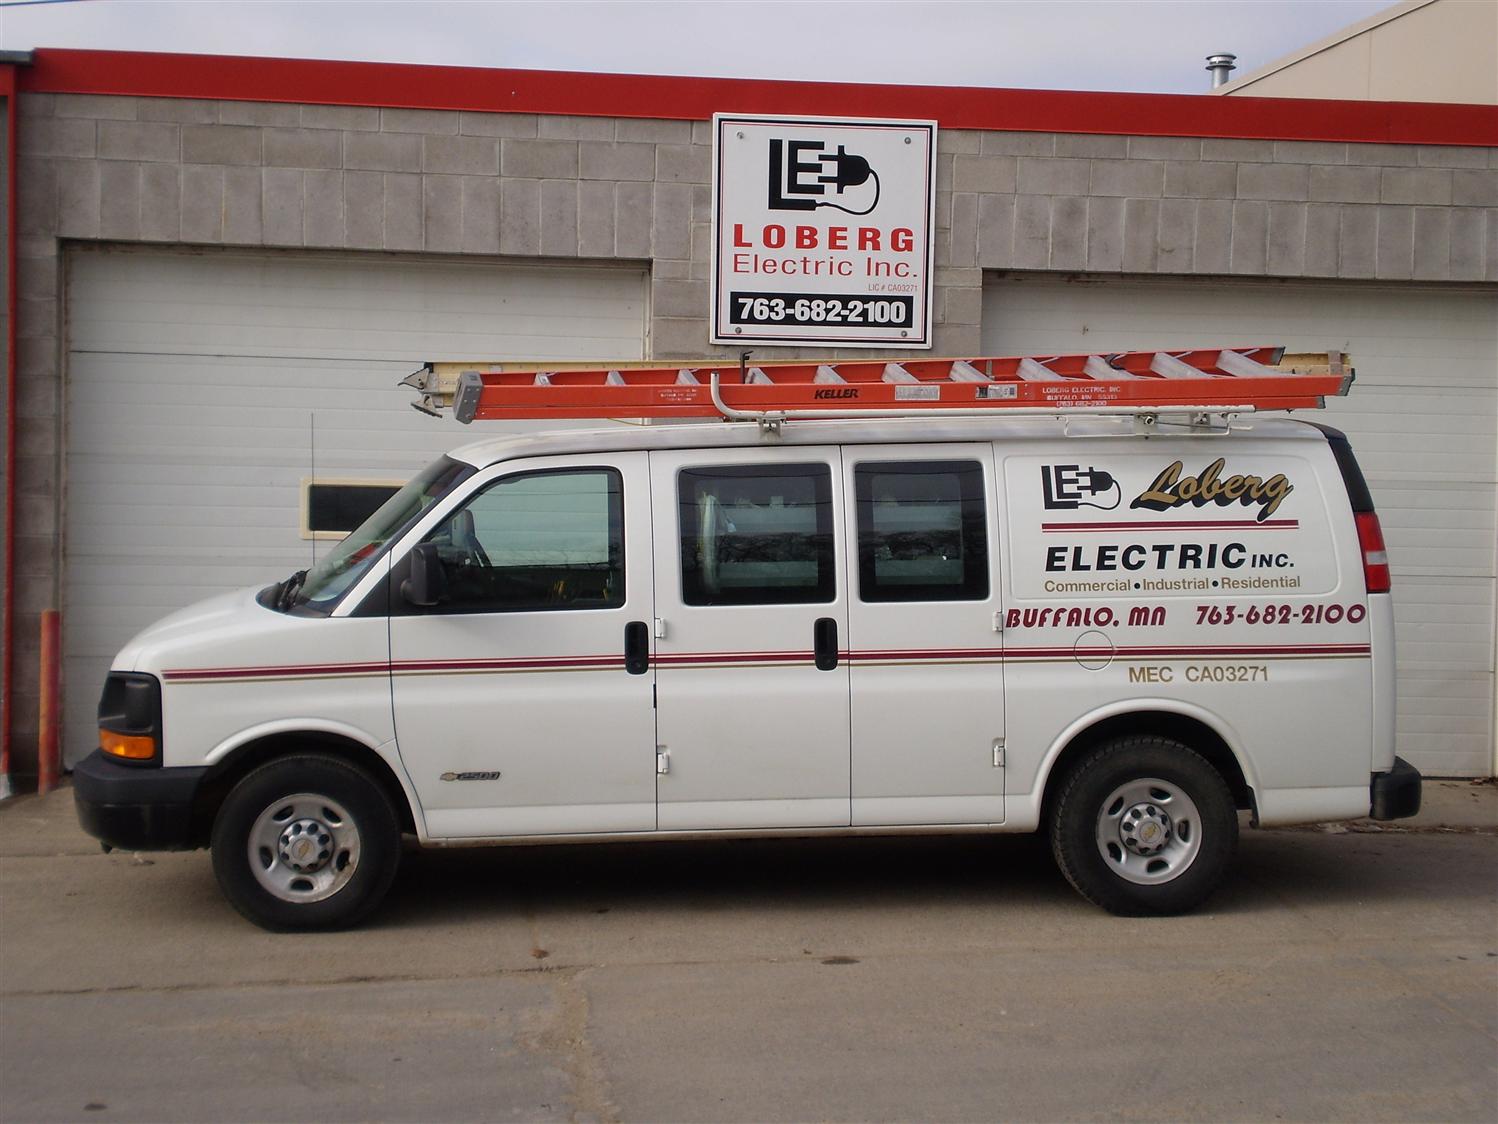 Loberg Electric Inc